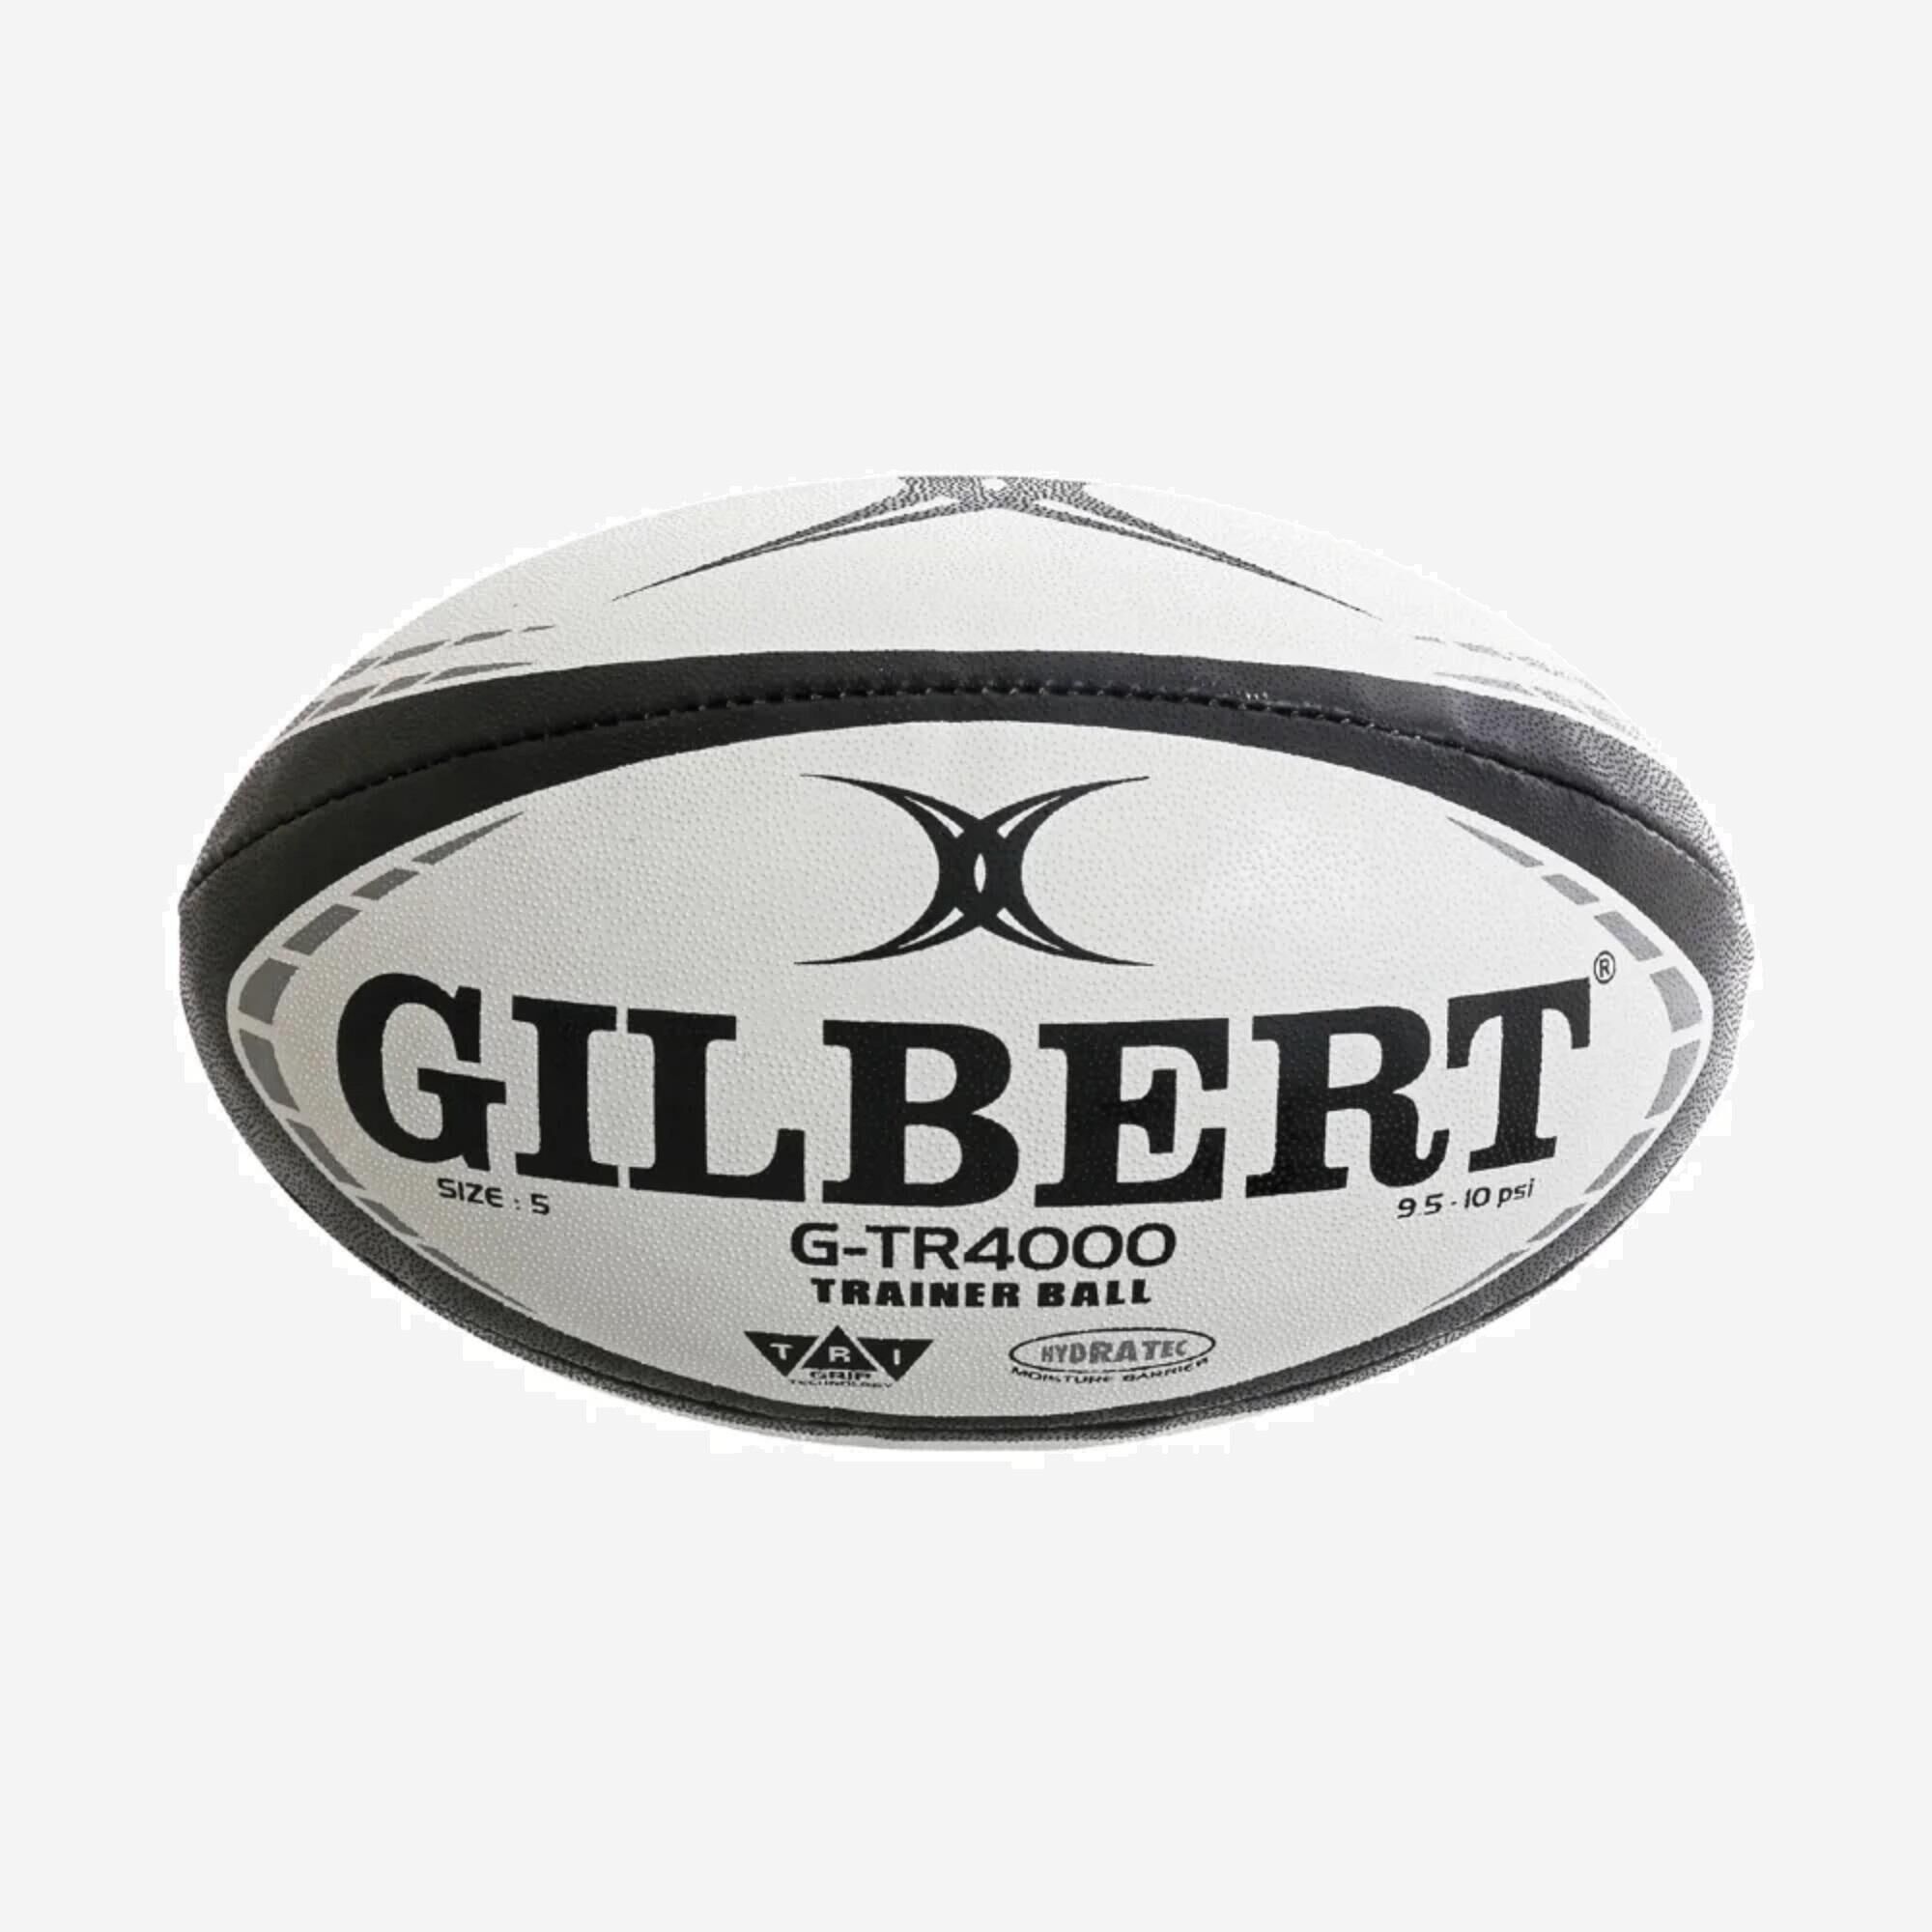 GILBERT Rugby Ball Gtr4000 Size 5 - White/Black